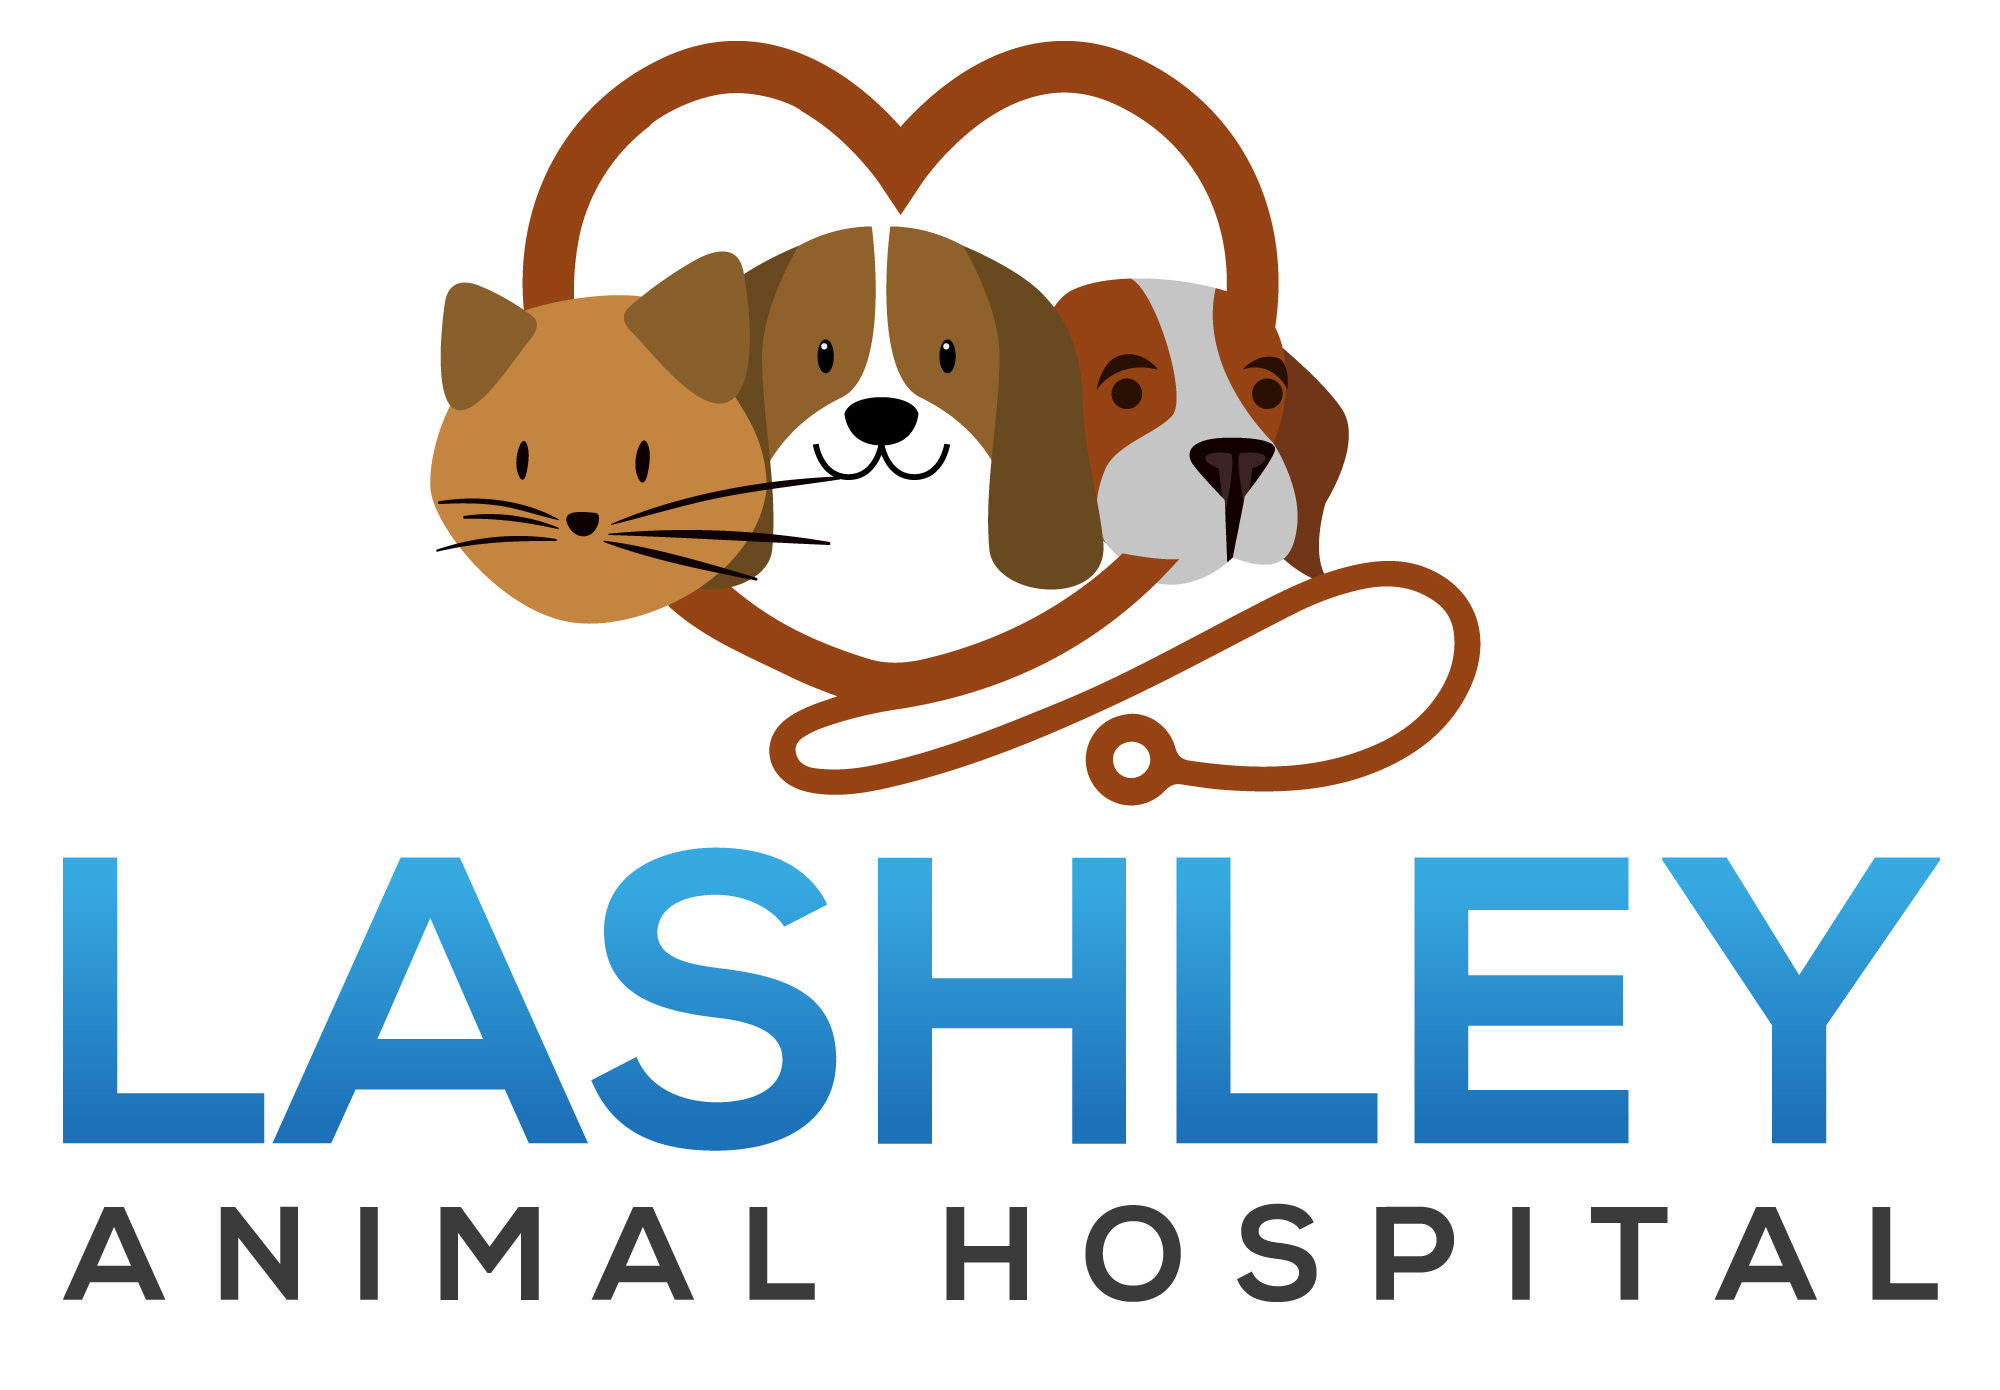 Lashley Animal Hospital